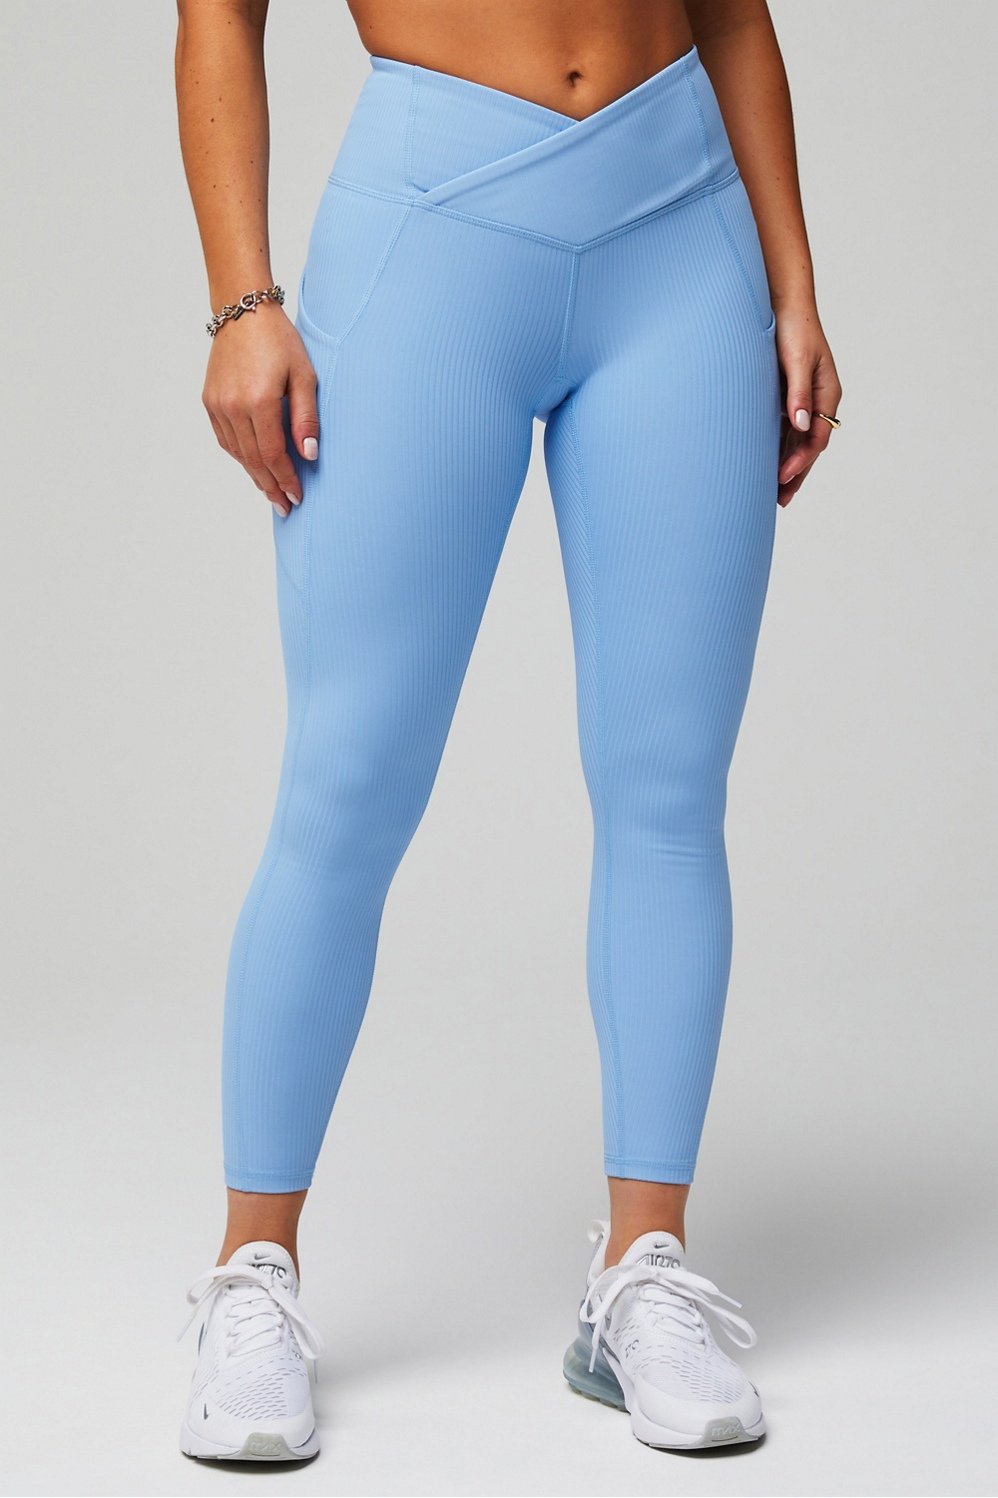 Fabletics Lisette High Waisted Leggings XXS short NEW NWT Retail $84 yoga  pants